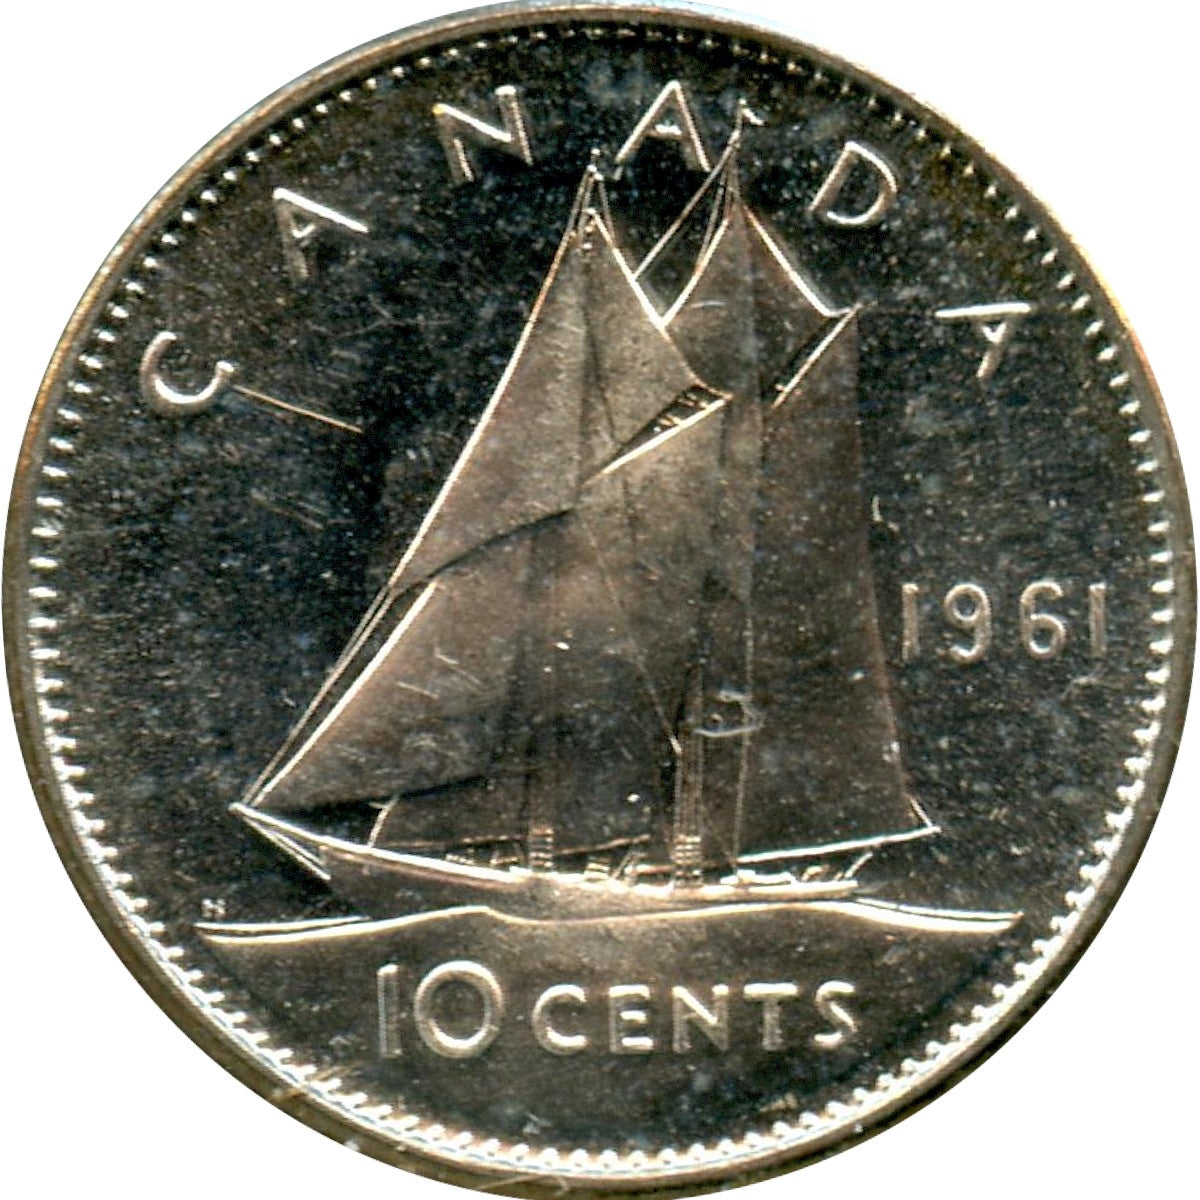 1961 Canada 10-cents Brilliant Uncirculated (MS-63)